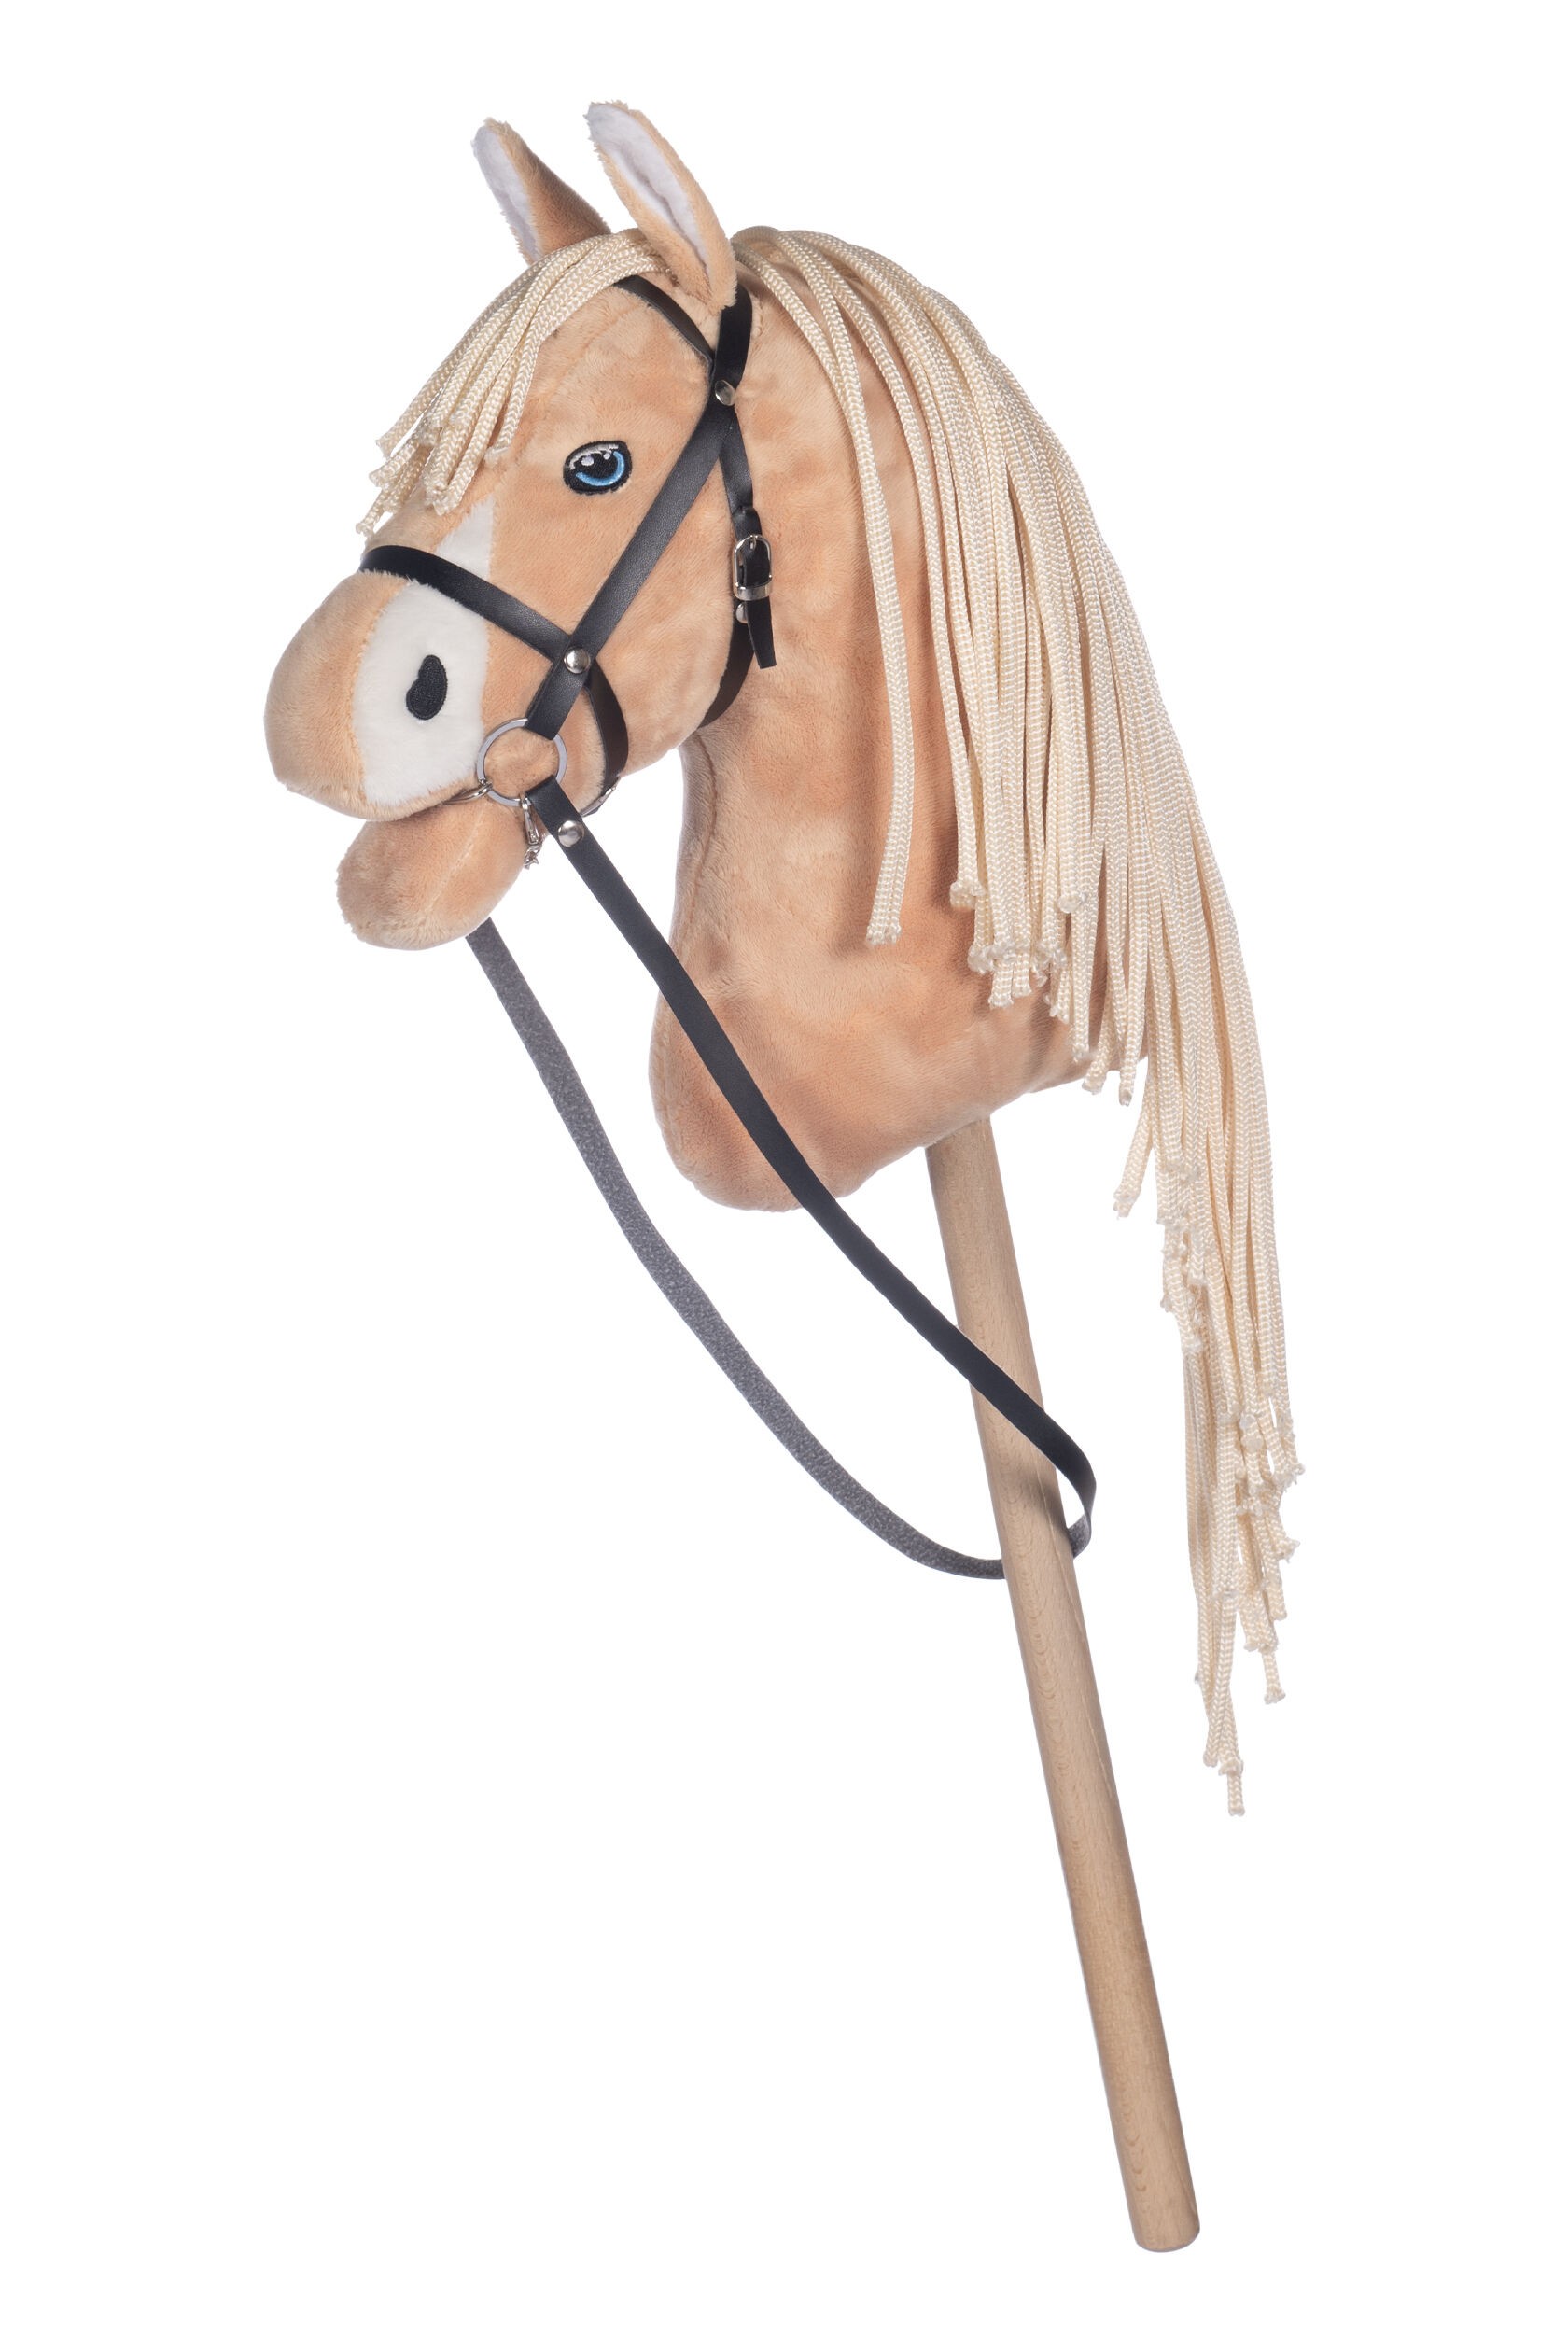 HKM Hobby Horse Steckenpferd - braun - Stück - 1